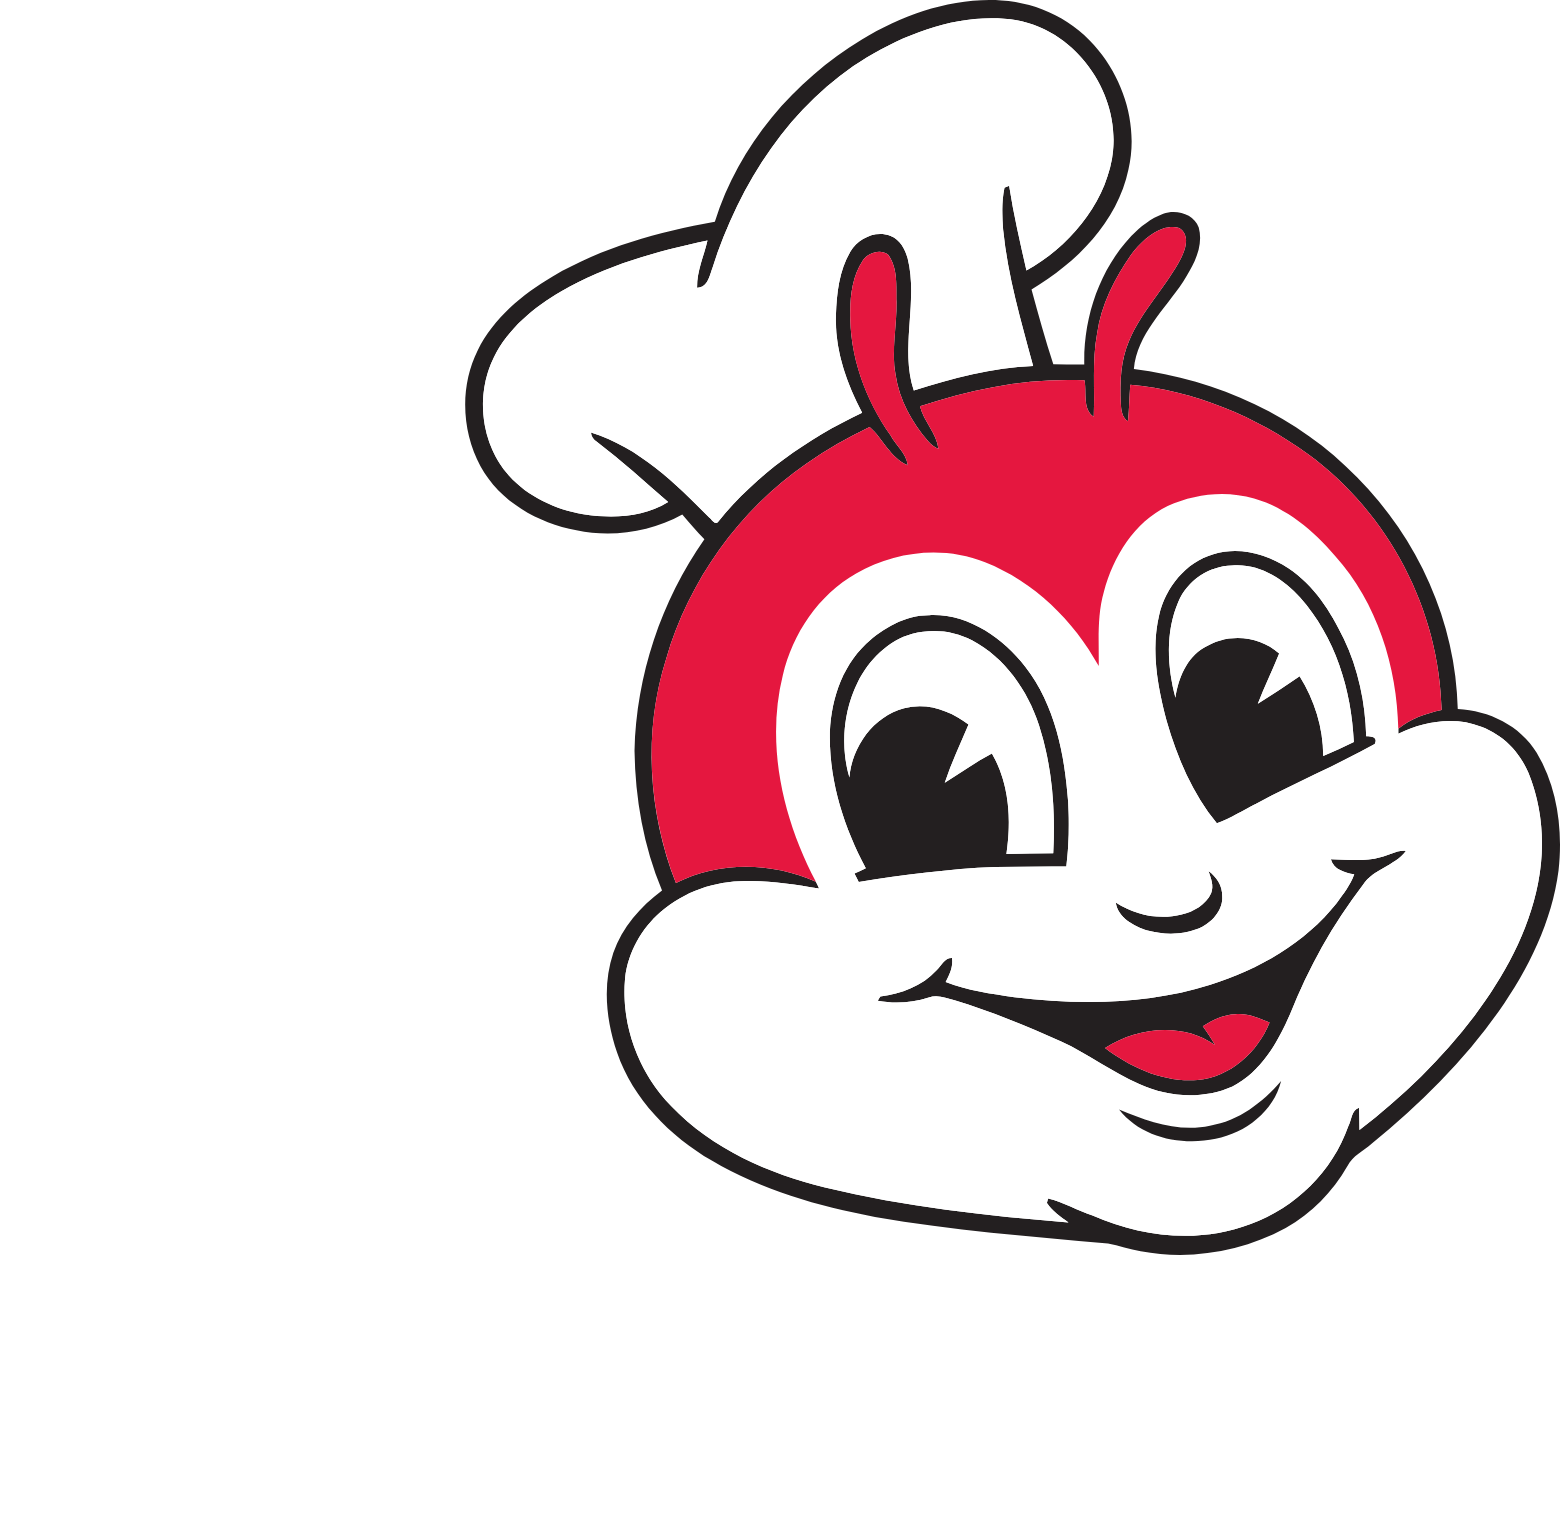 Jollibee logo large for dark backgrounds (transparent PNG)